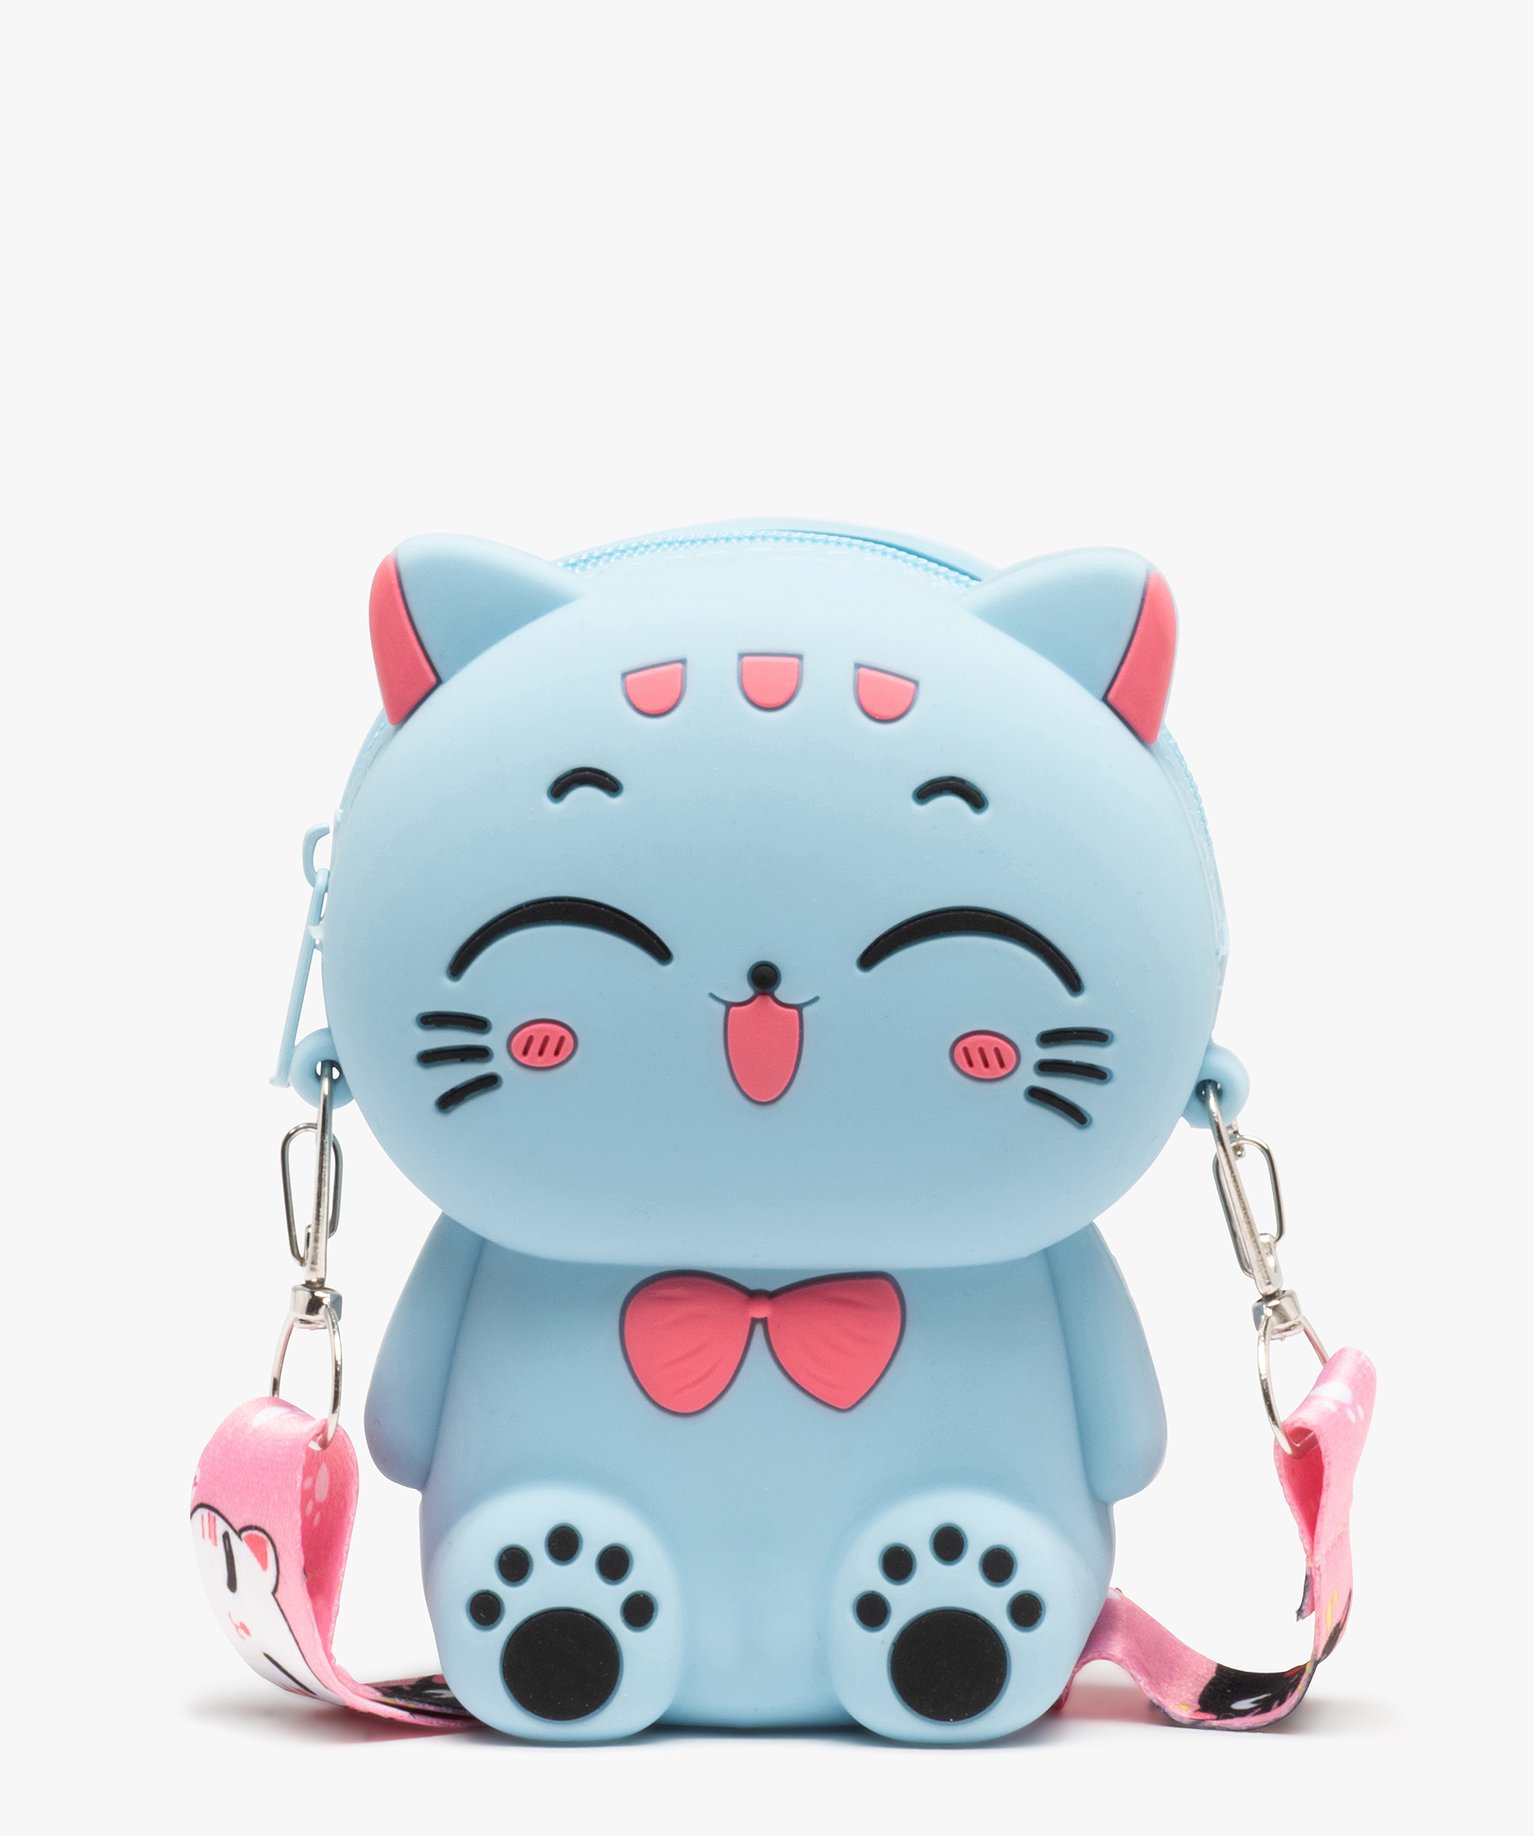 Pochette forme chat avec cordon satiné amovible fille - TU - bleu standard - GEMO